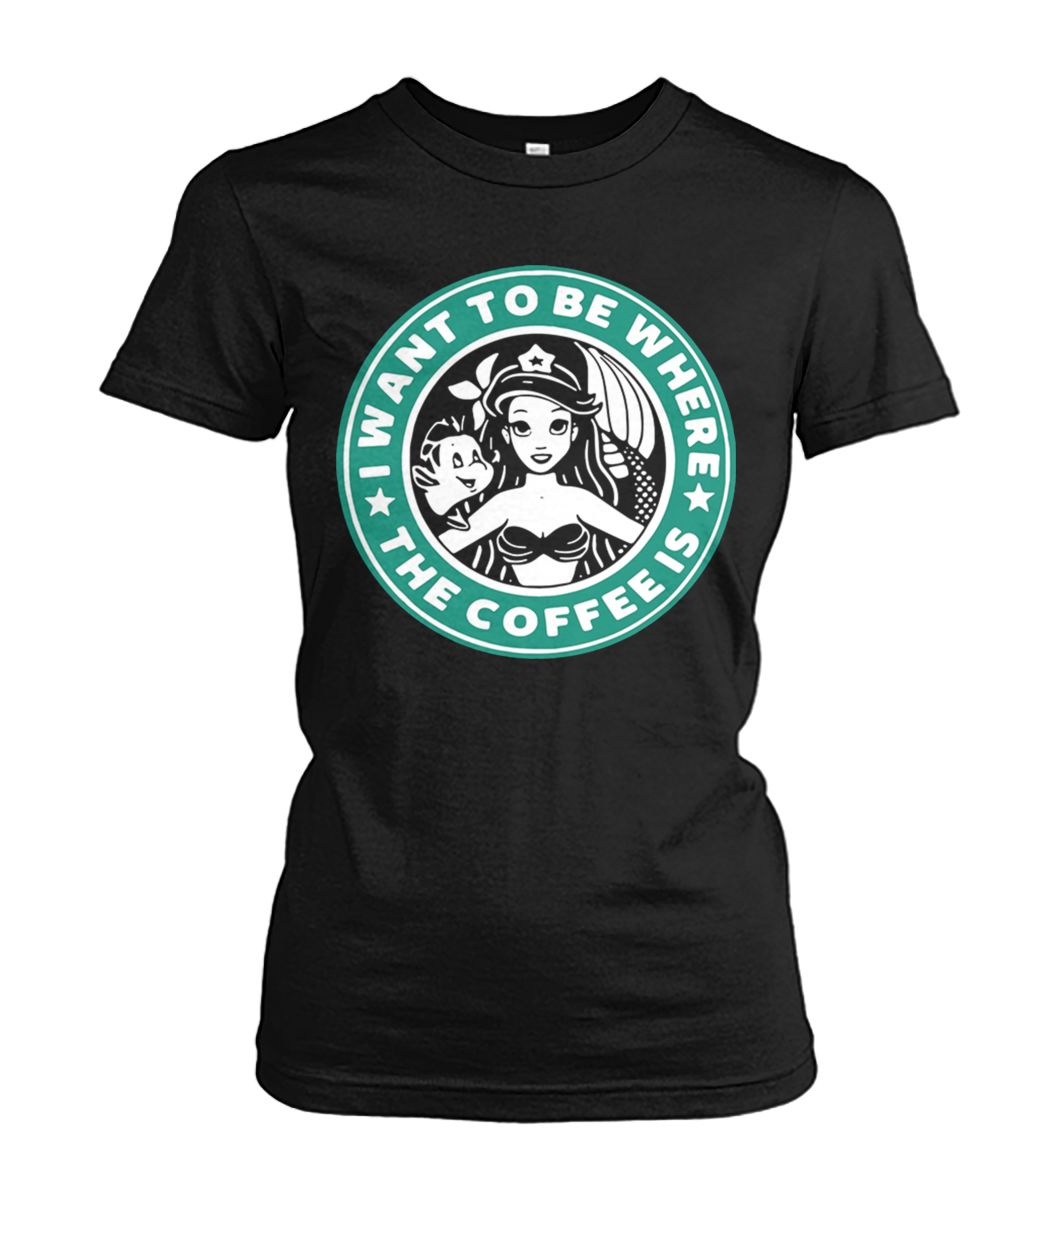 I want to be where the coffee is ariel little mermaid starbucks mashup women's crew tee